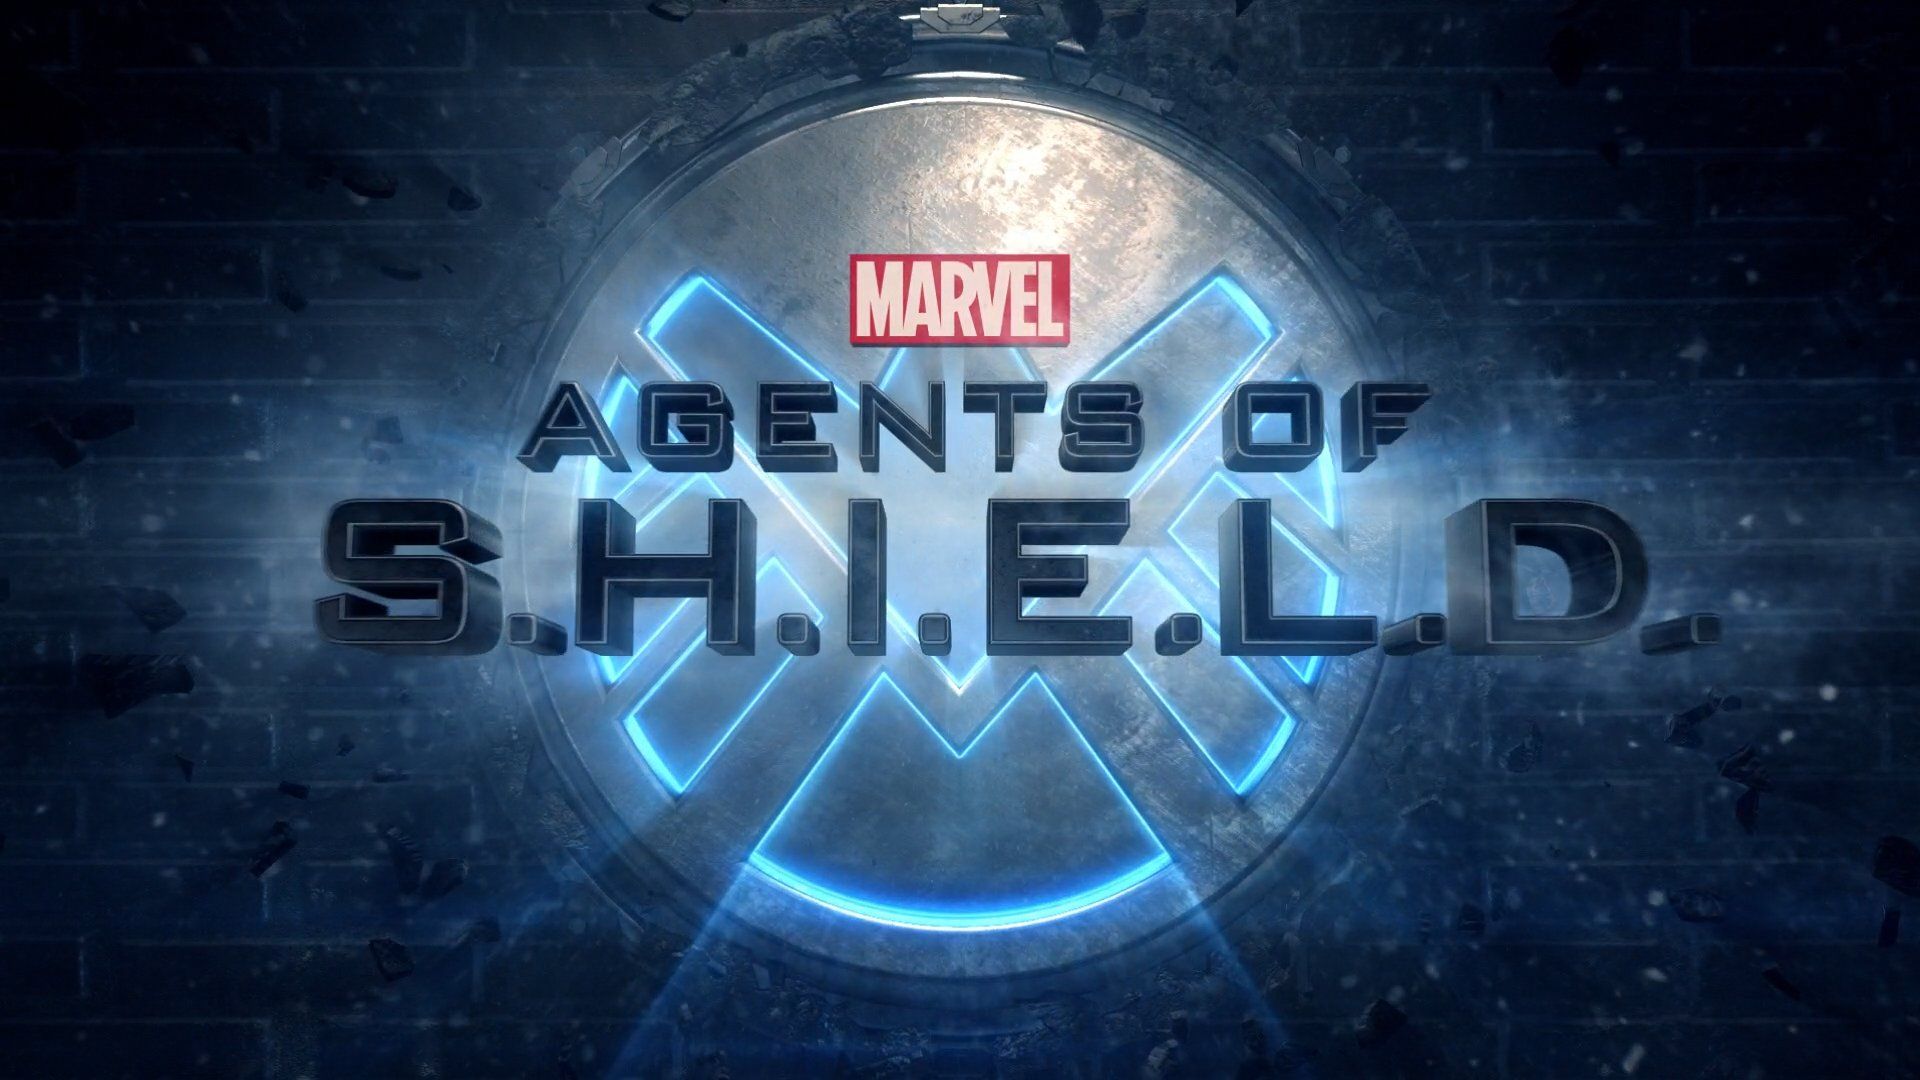 Agents of SHIELD Season 7. Captain America Fan Theory